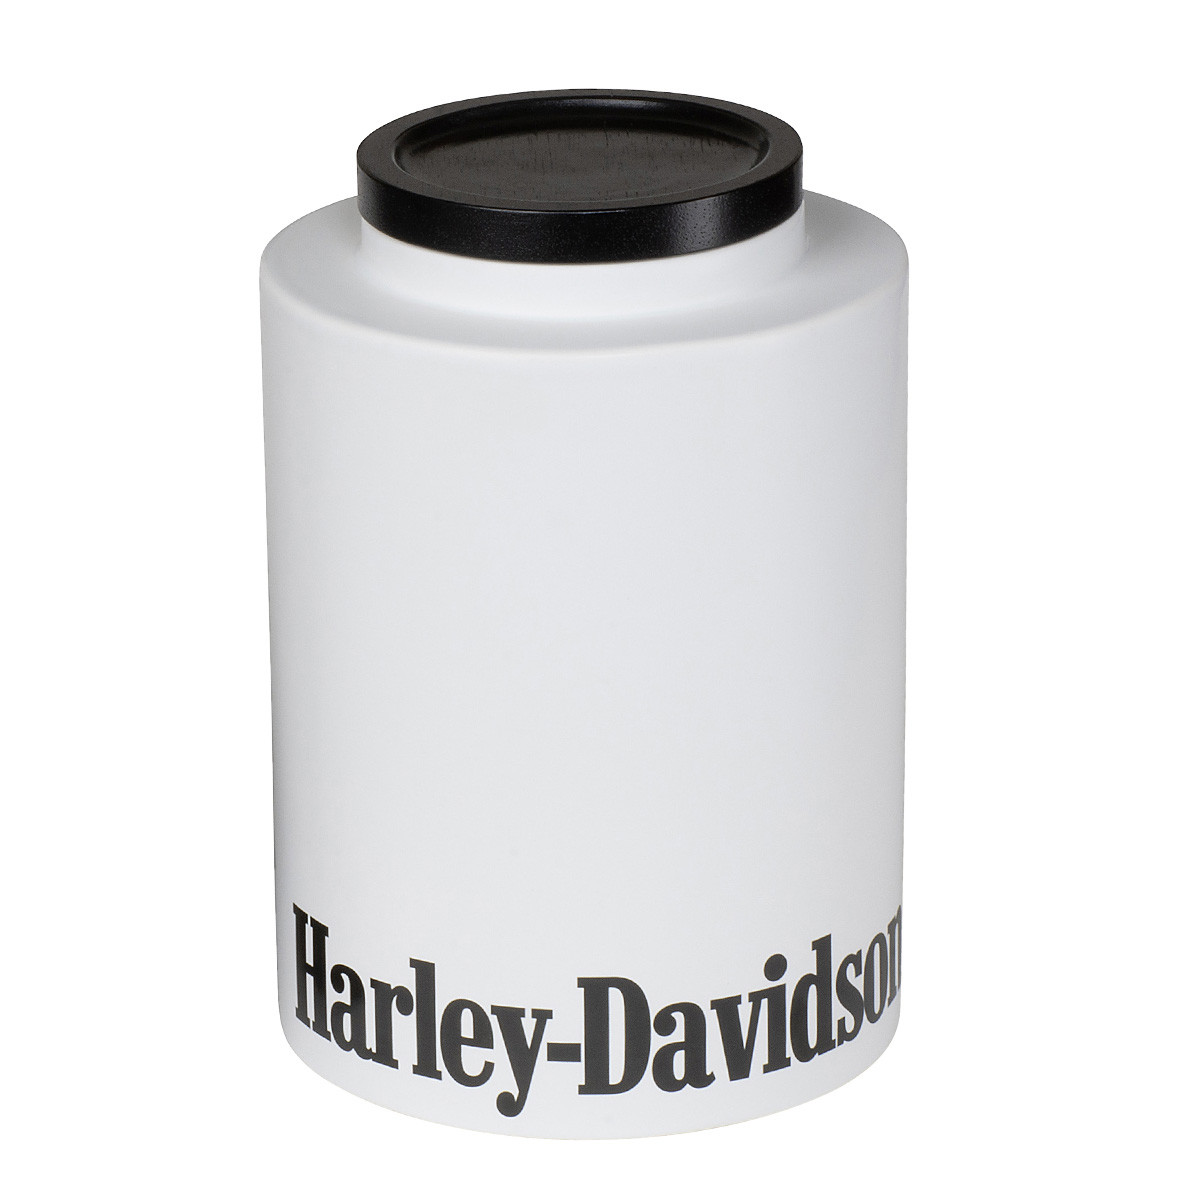 HARLEY DAVIDSON COOKIE JAR -LARGE